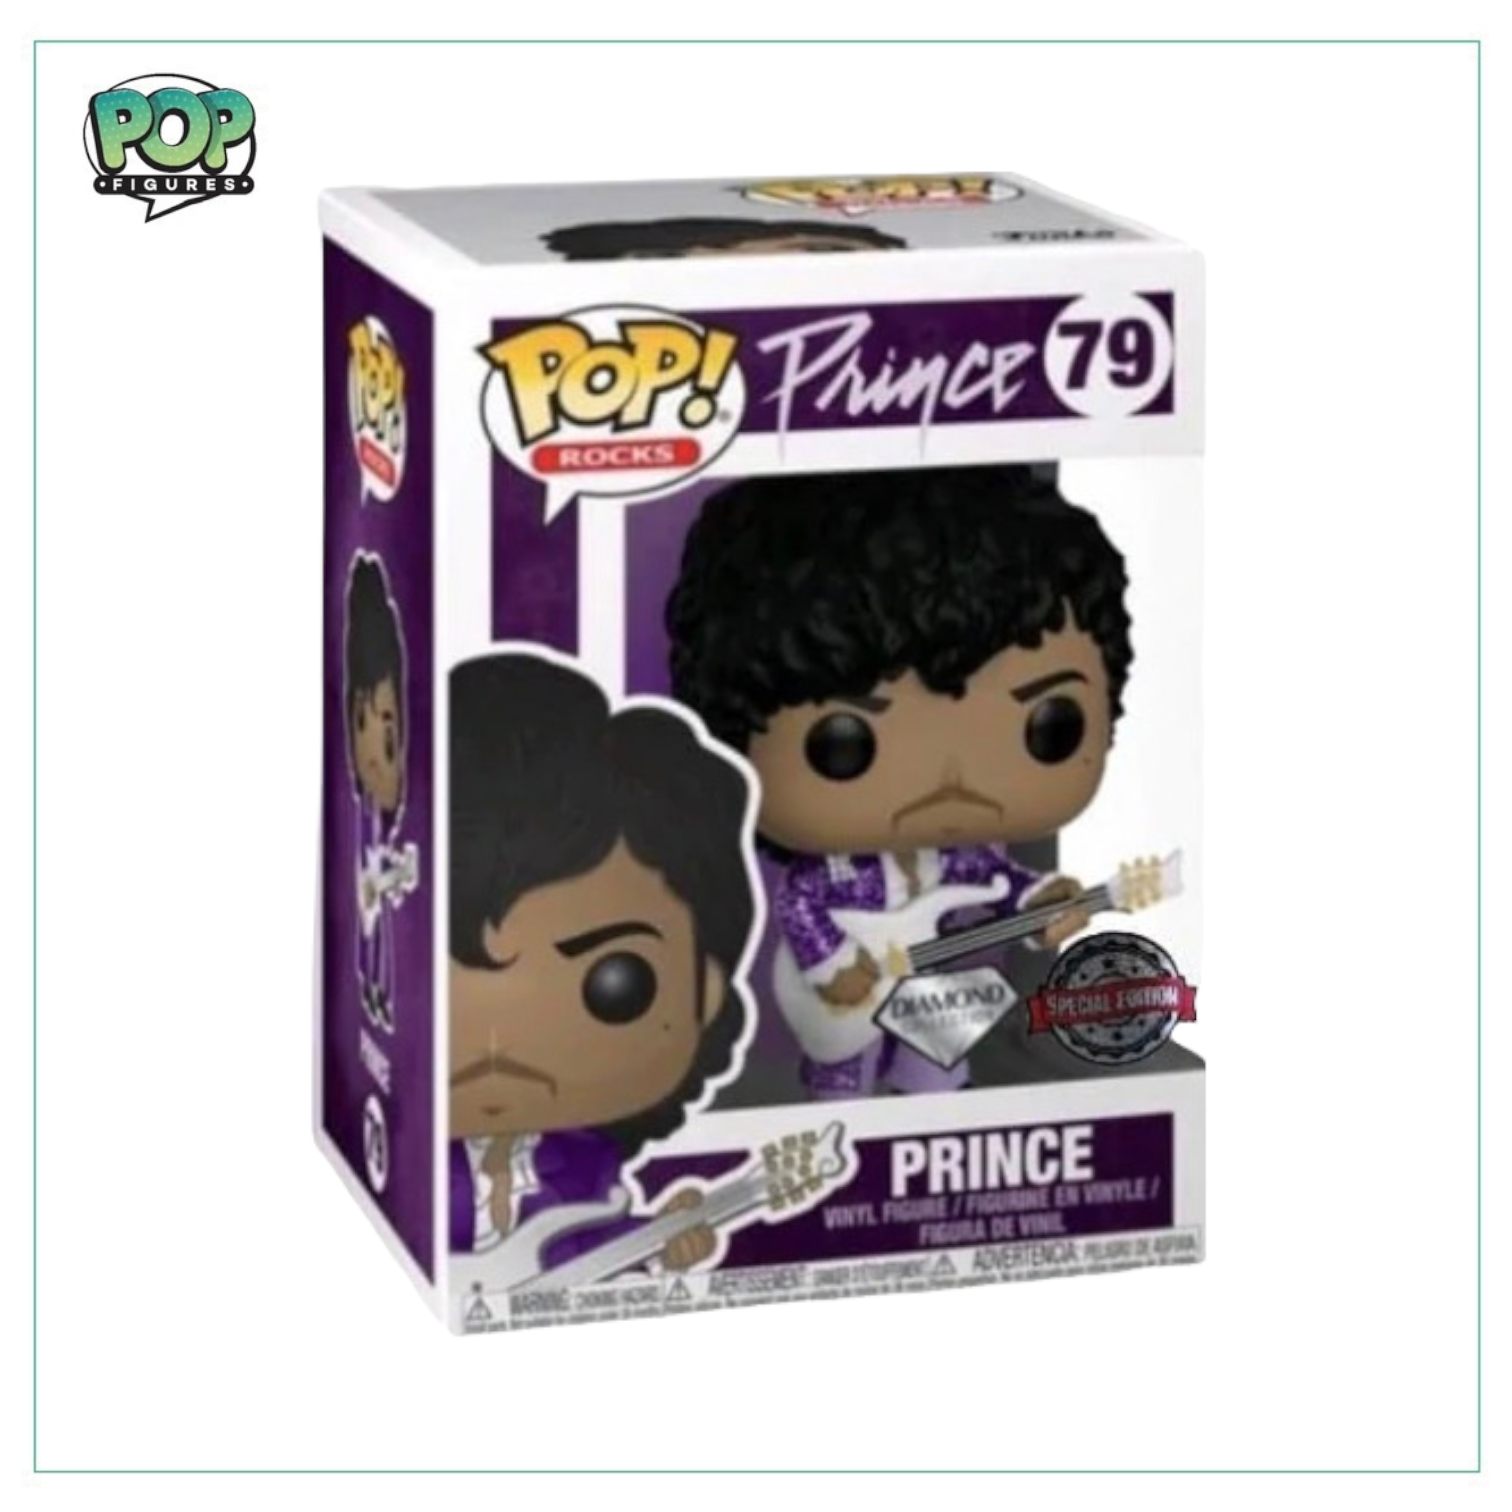 Prince (Diamond Edition) #79 Funko Pop! - Prince -Special Edition